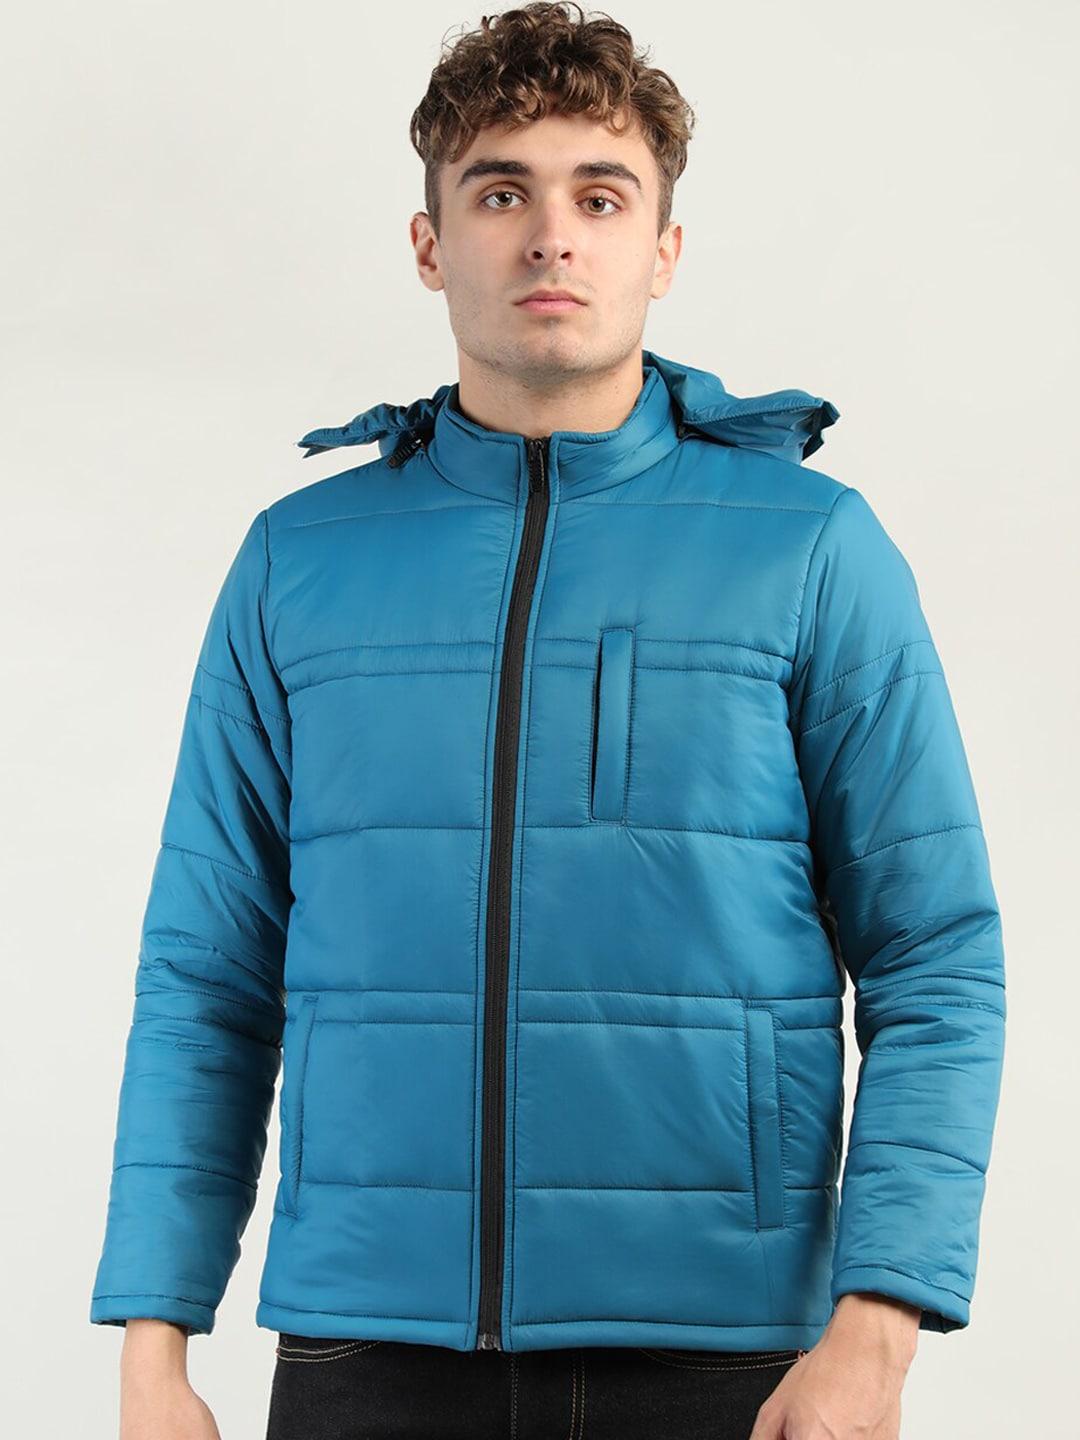 chkokko-men-teal-outdoor-padded-jacket